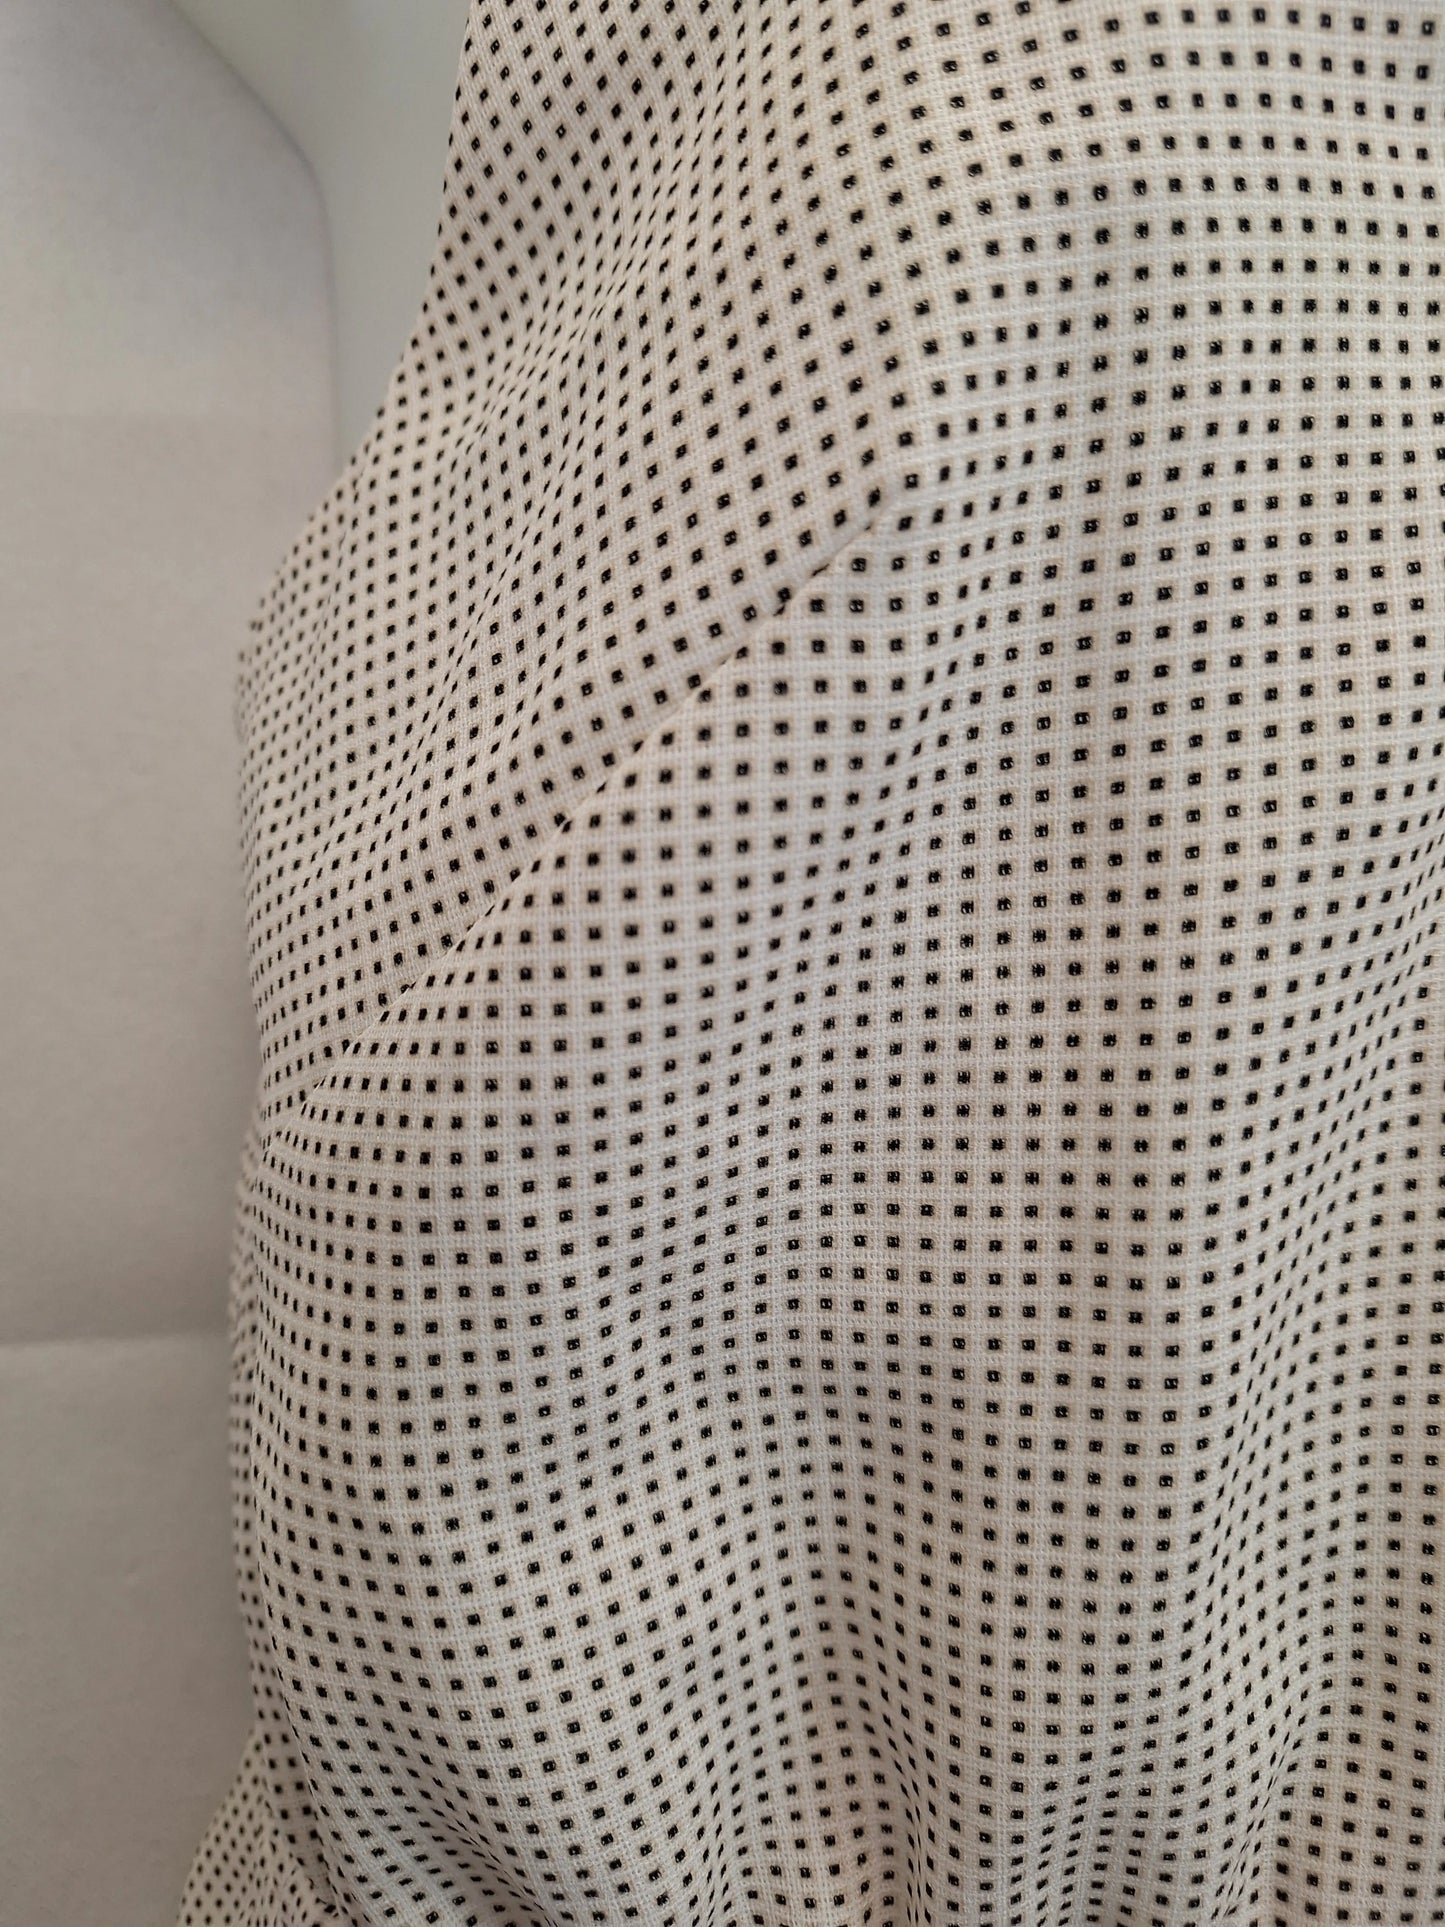 Shona Joy Summer Spotted Handkerchief Hem Midi Dress Size 12 by SwapUp-Online Second Hand Store-Online Thrift Store